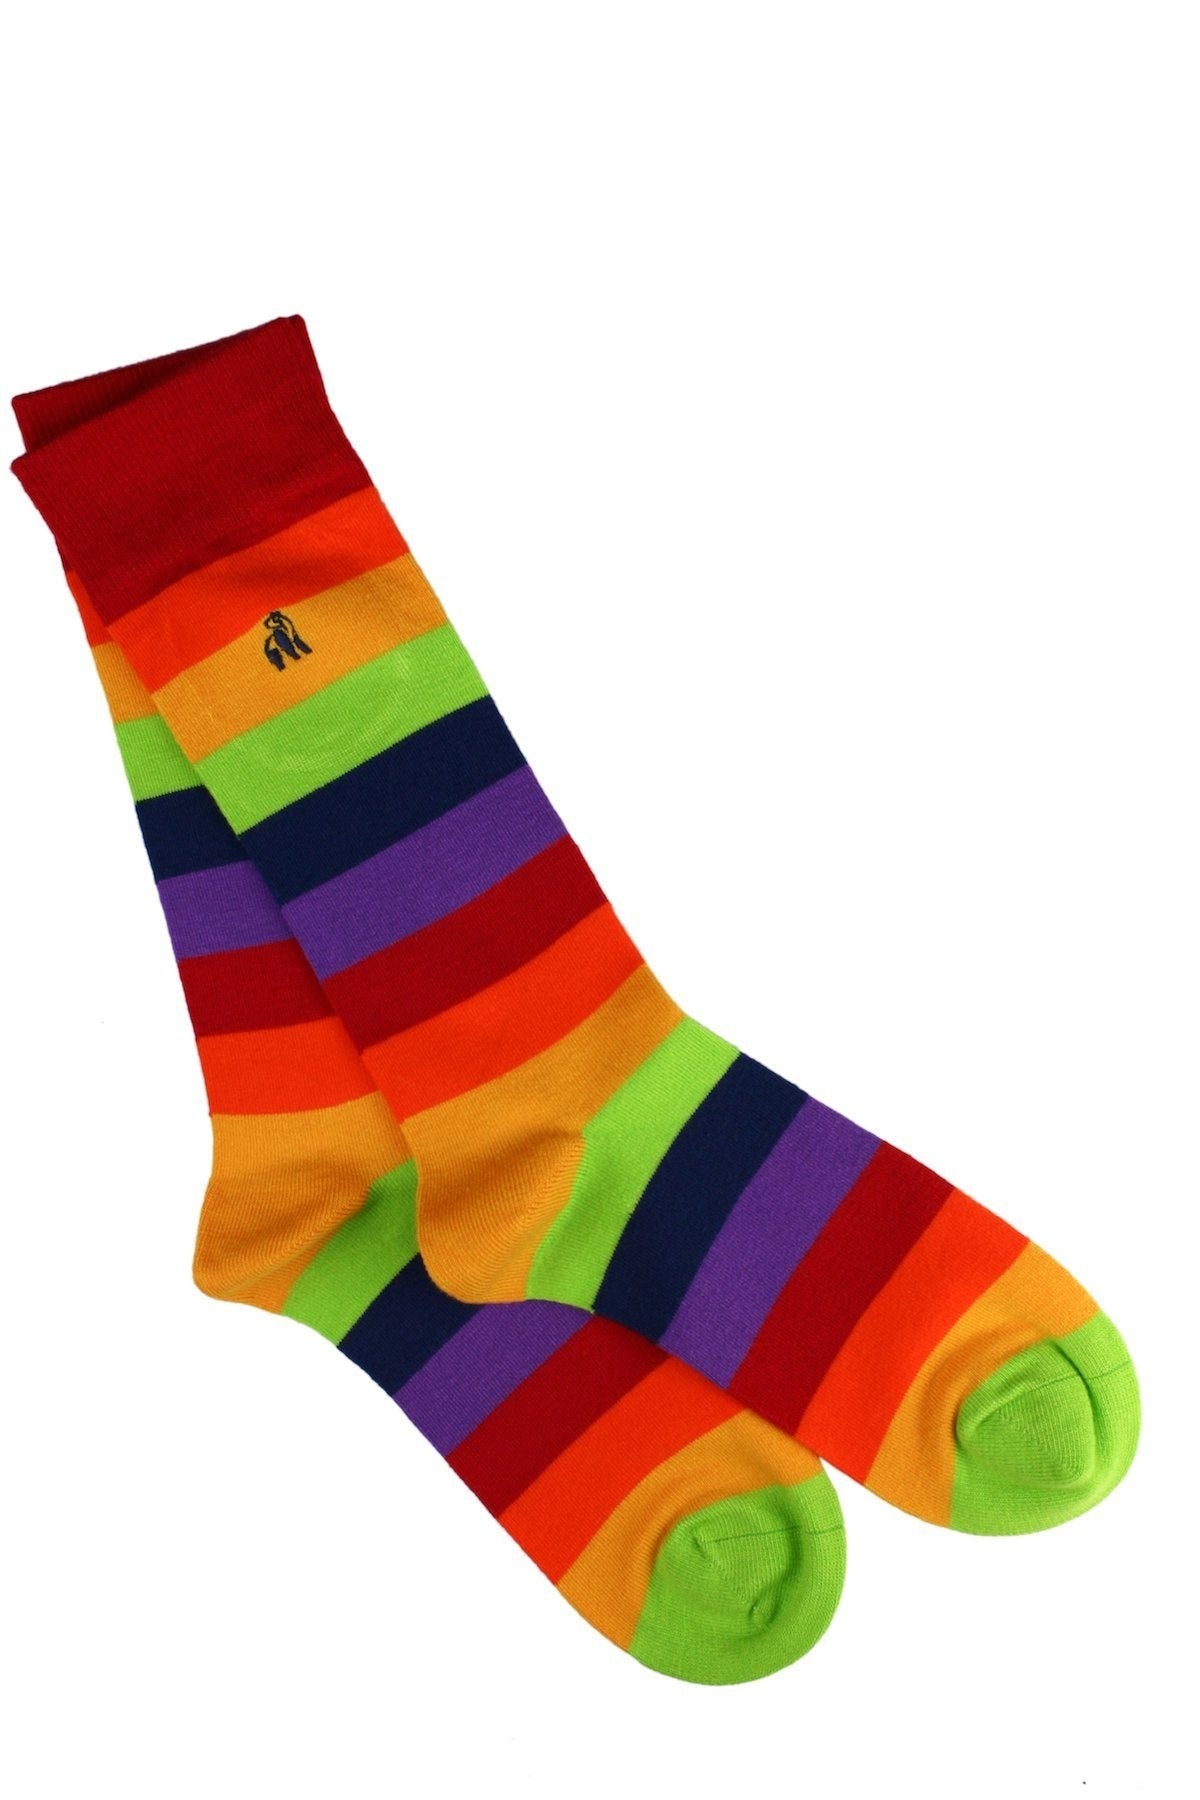 Swole Panda Pride Socks